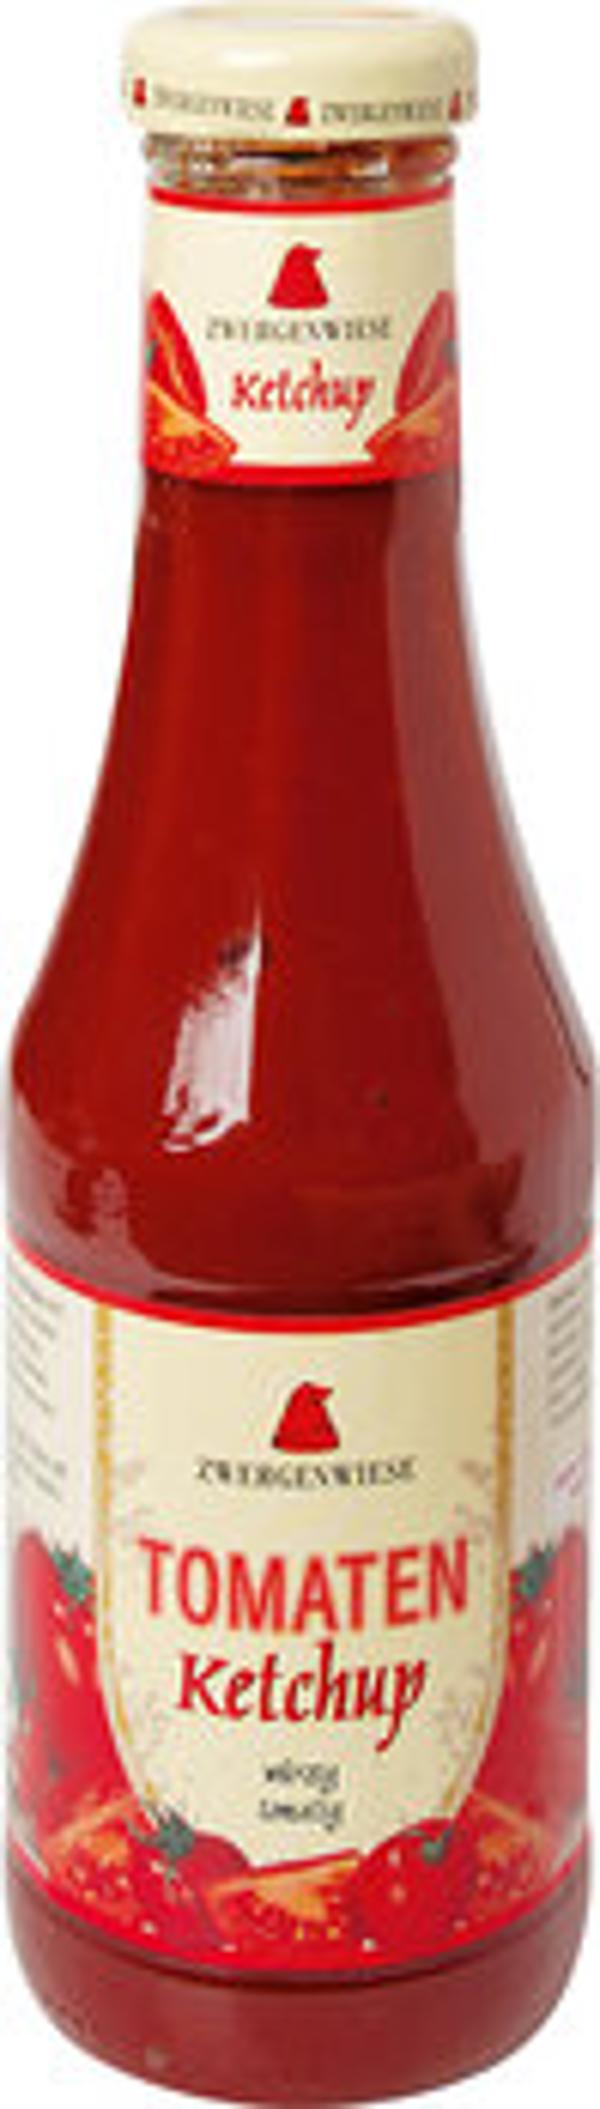 Produktfoto zu Tomaten Ketchup